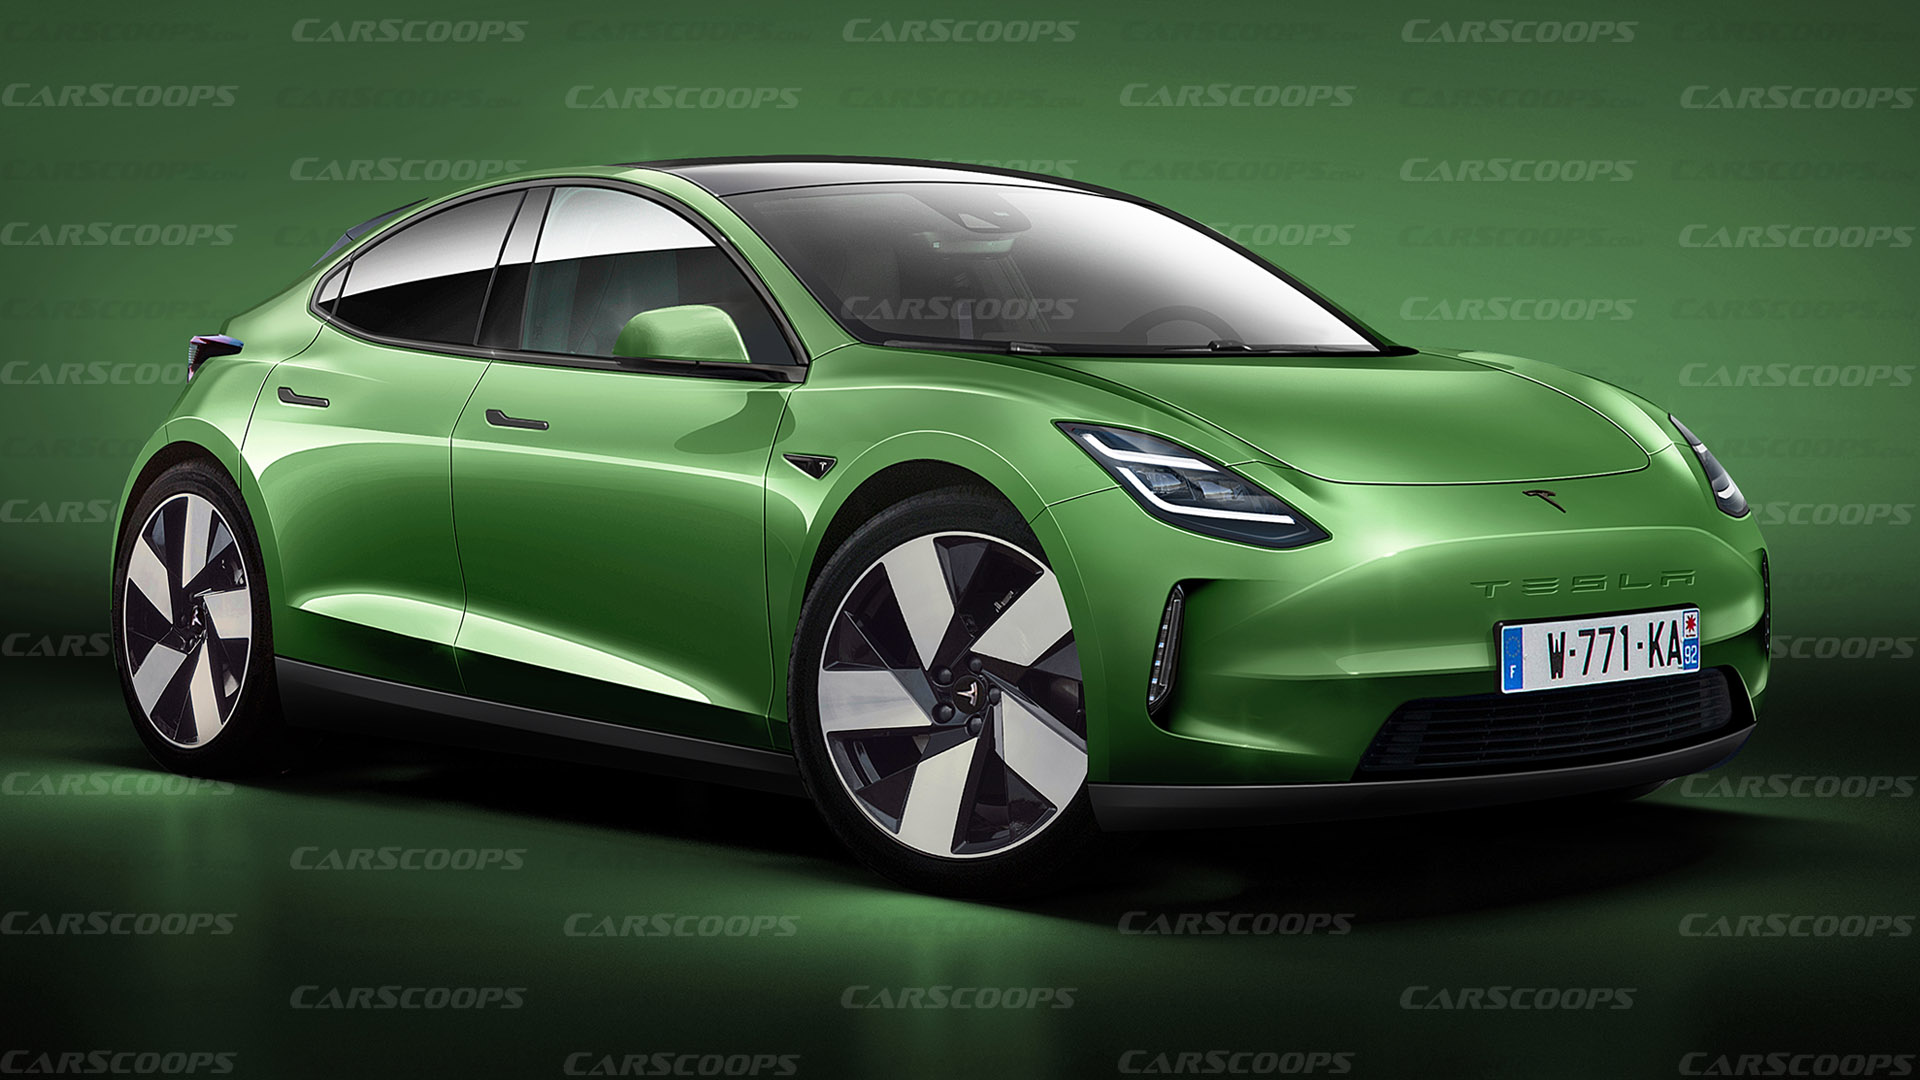 https://www.carscoops.com/wp-content/uploads/2021/12/Tesla-EV-Compact-Hatchback-Rendering-Carscoops-2.jpg